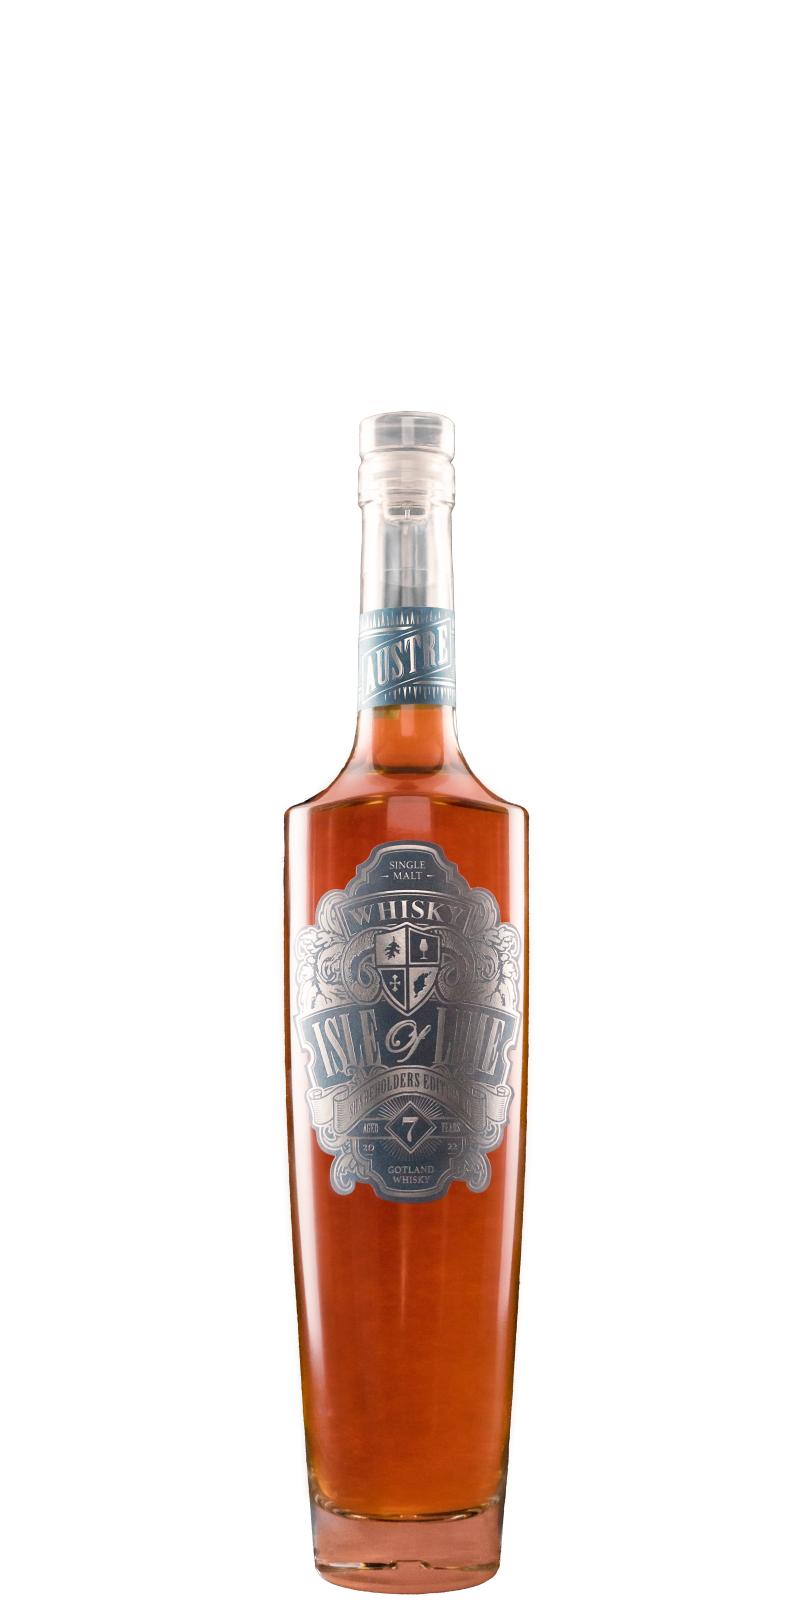 Isle of Lime Austre Shareholders Edition VII 1st fill bourbon and virgin american oak 46% 500ml